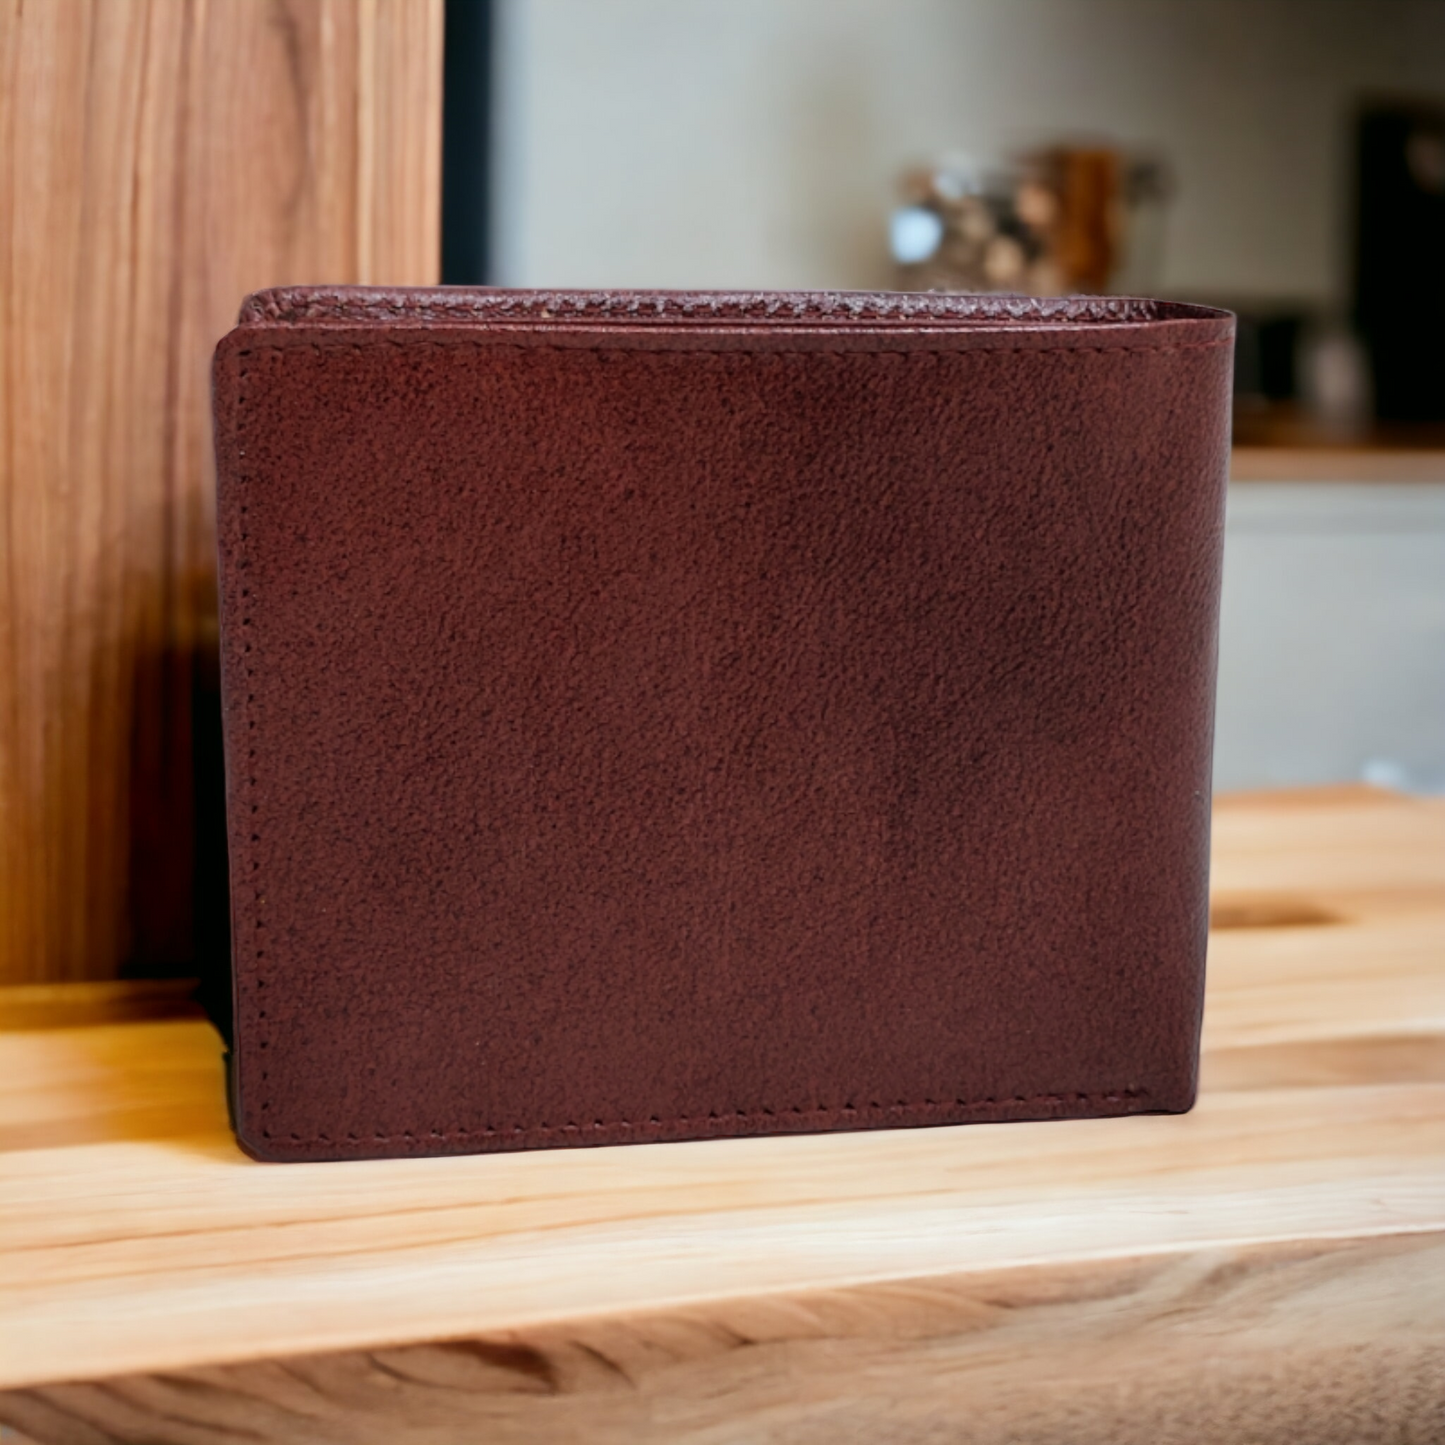 LINDSEY STREET Leather Wallet For Men Leather Money Bag Leather Notecase, Card Holder,  Gift for Him